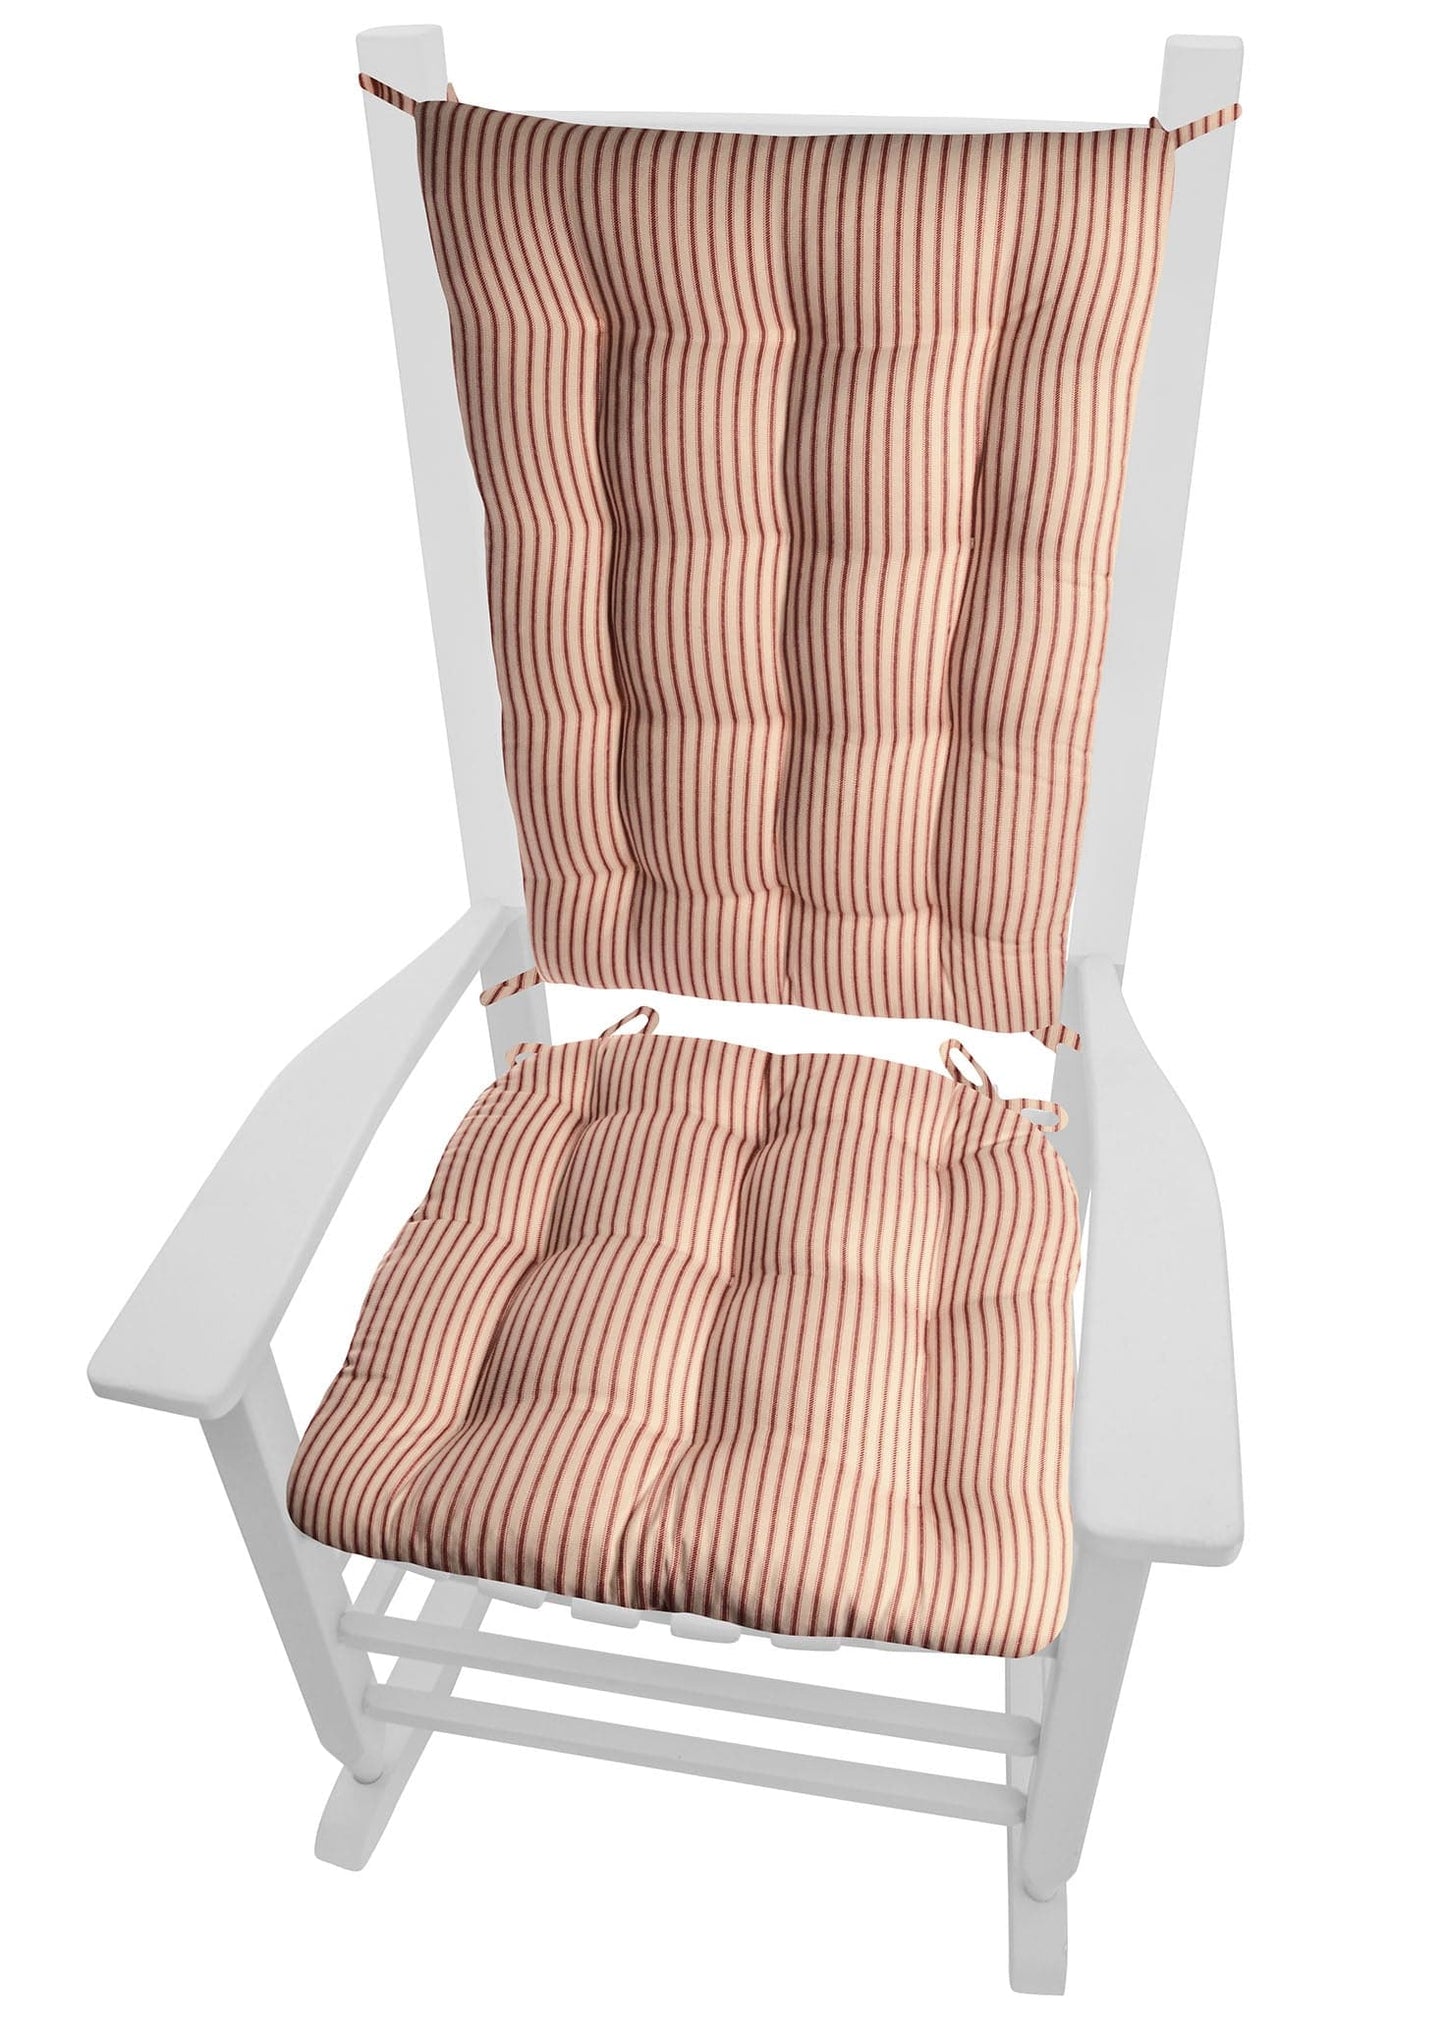 VCS - Berlin Ticking Red Standard Rocking Chair Cushion Set